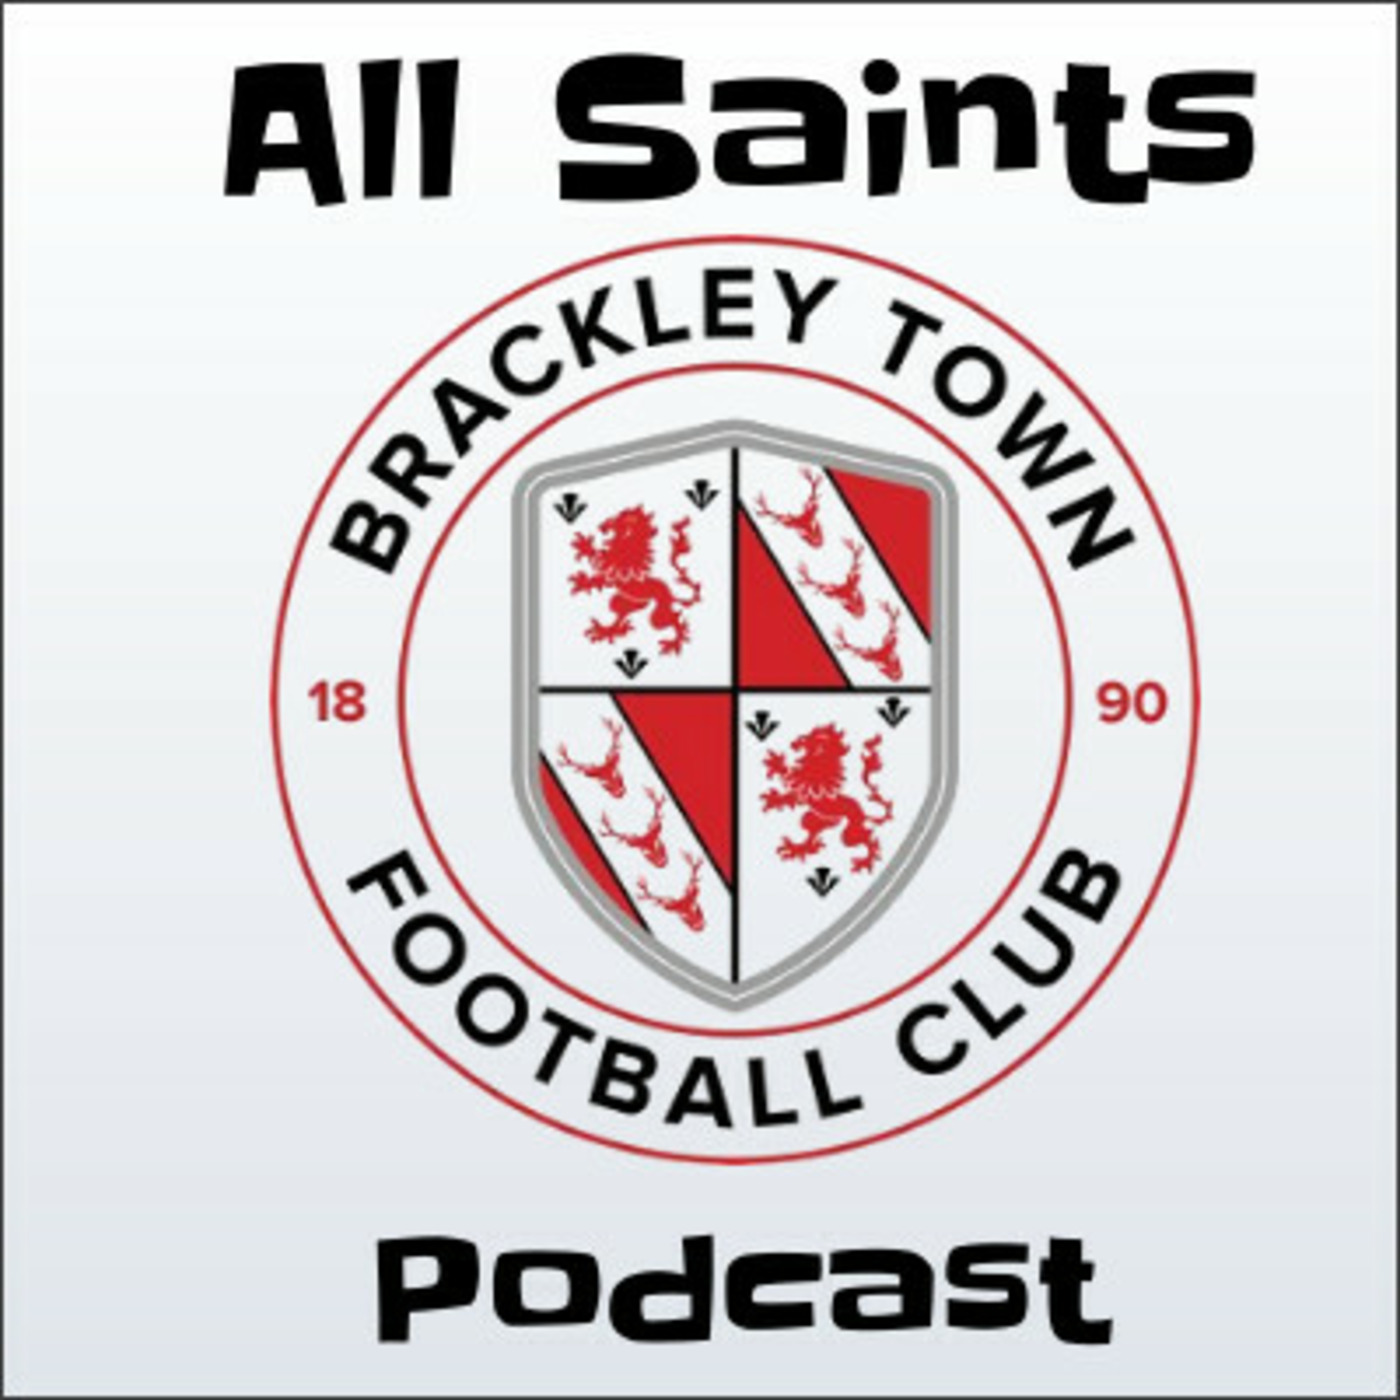 Episode 44: All saints podcast 75